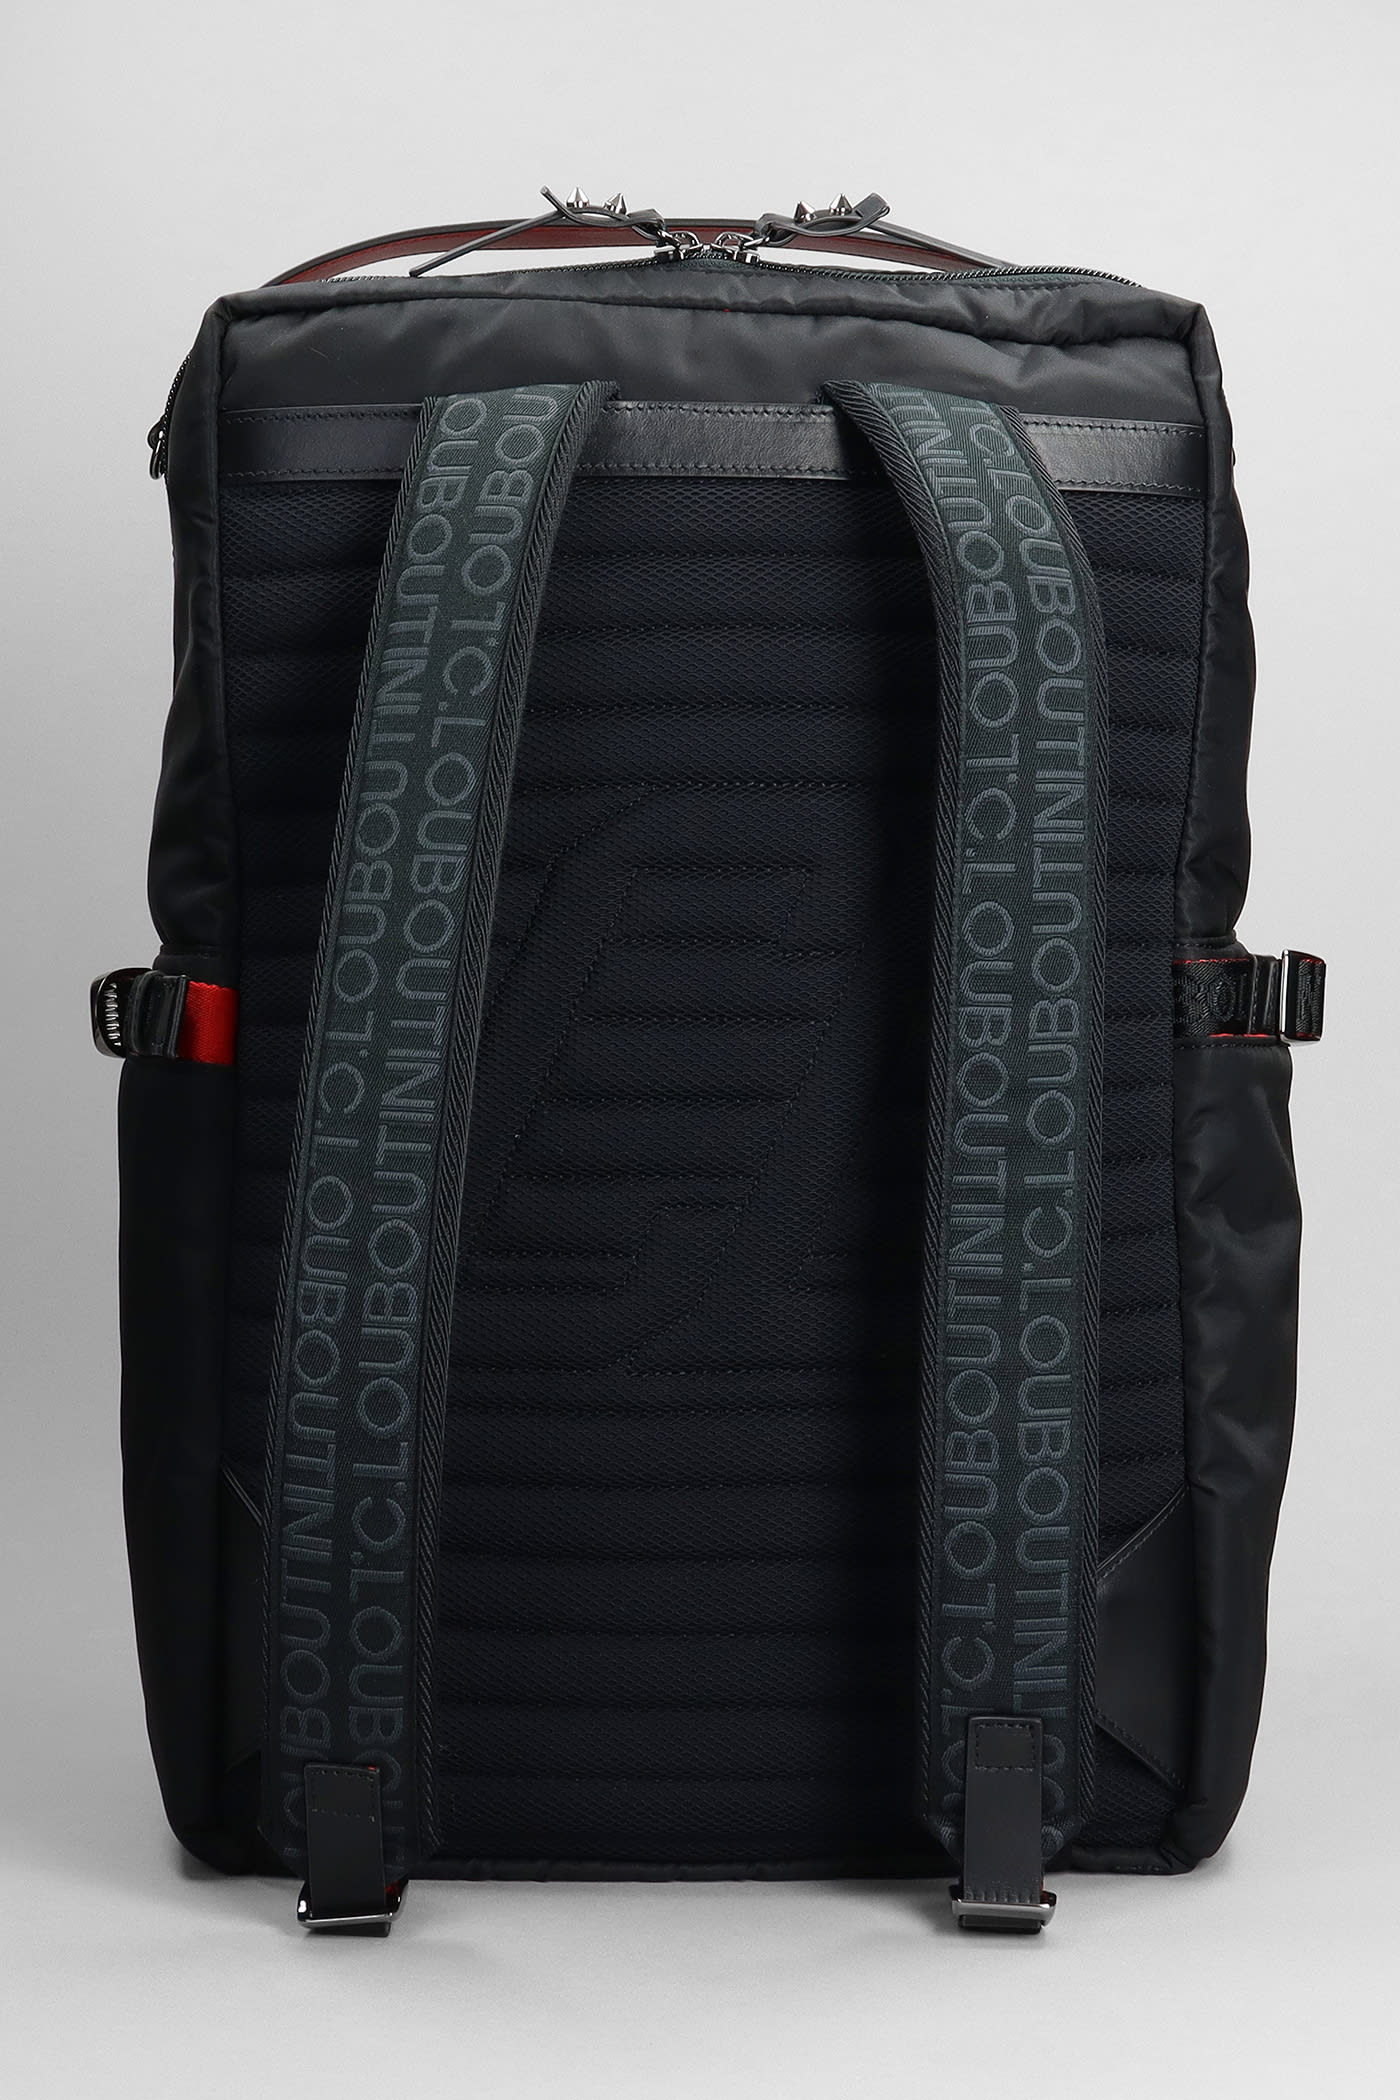 Loubideal Backpack in Black - Christian Louboutin